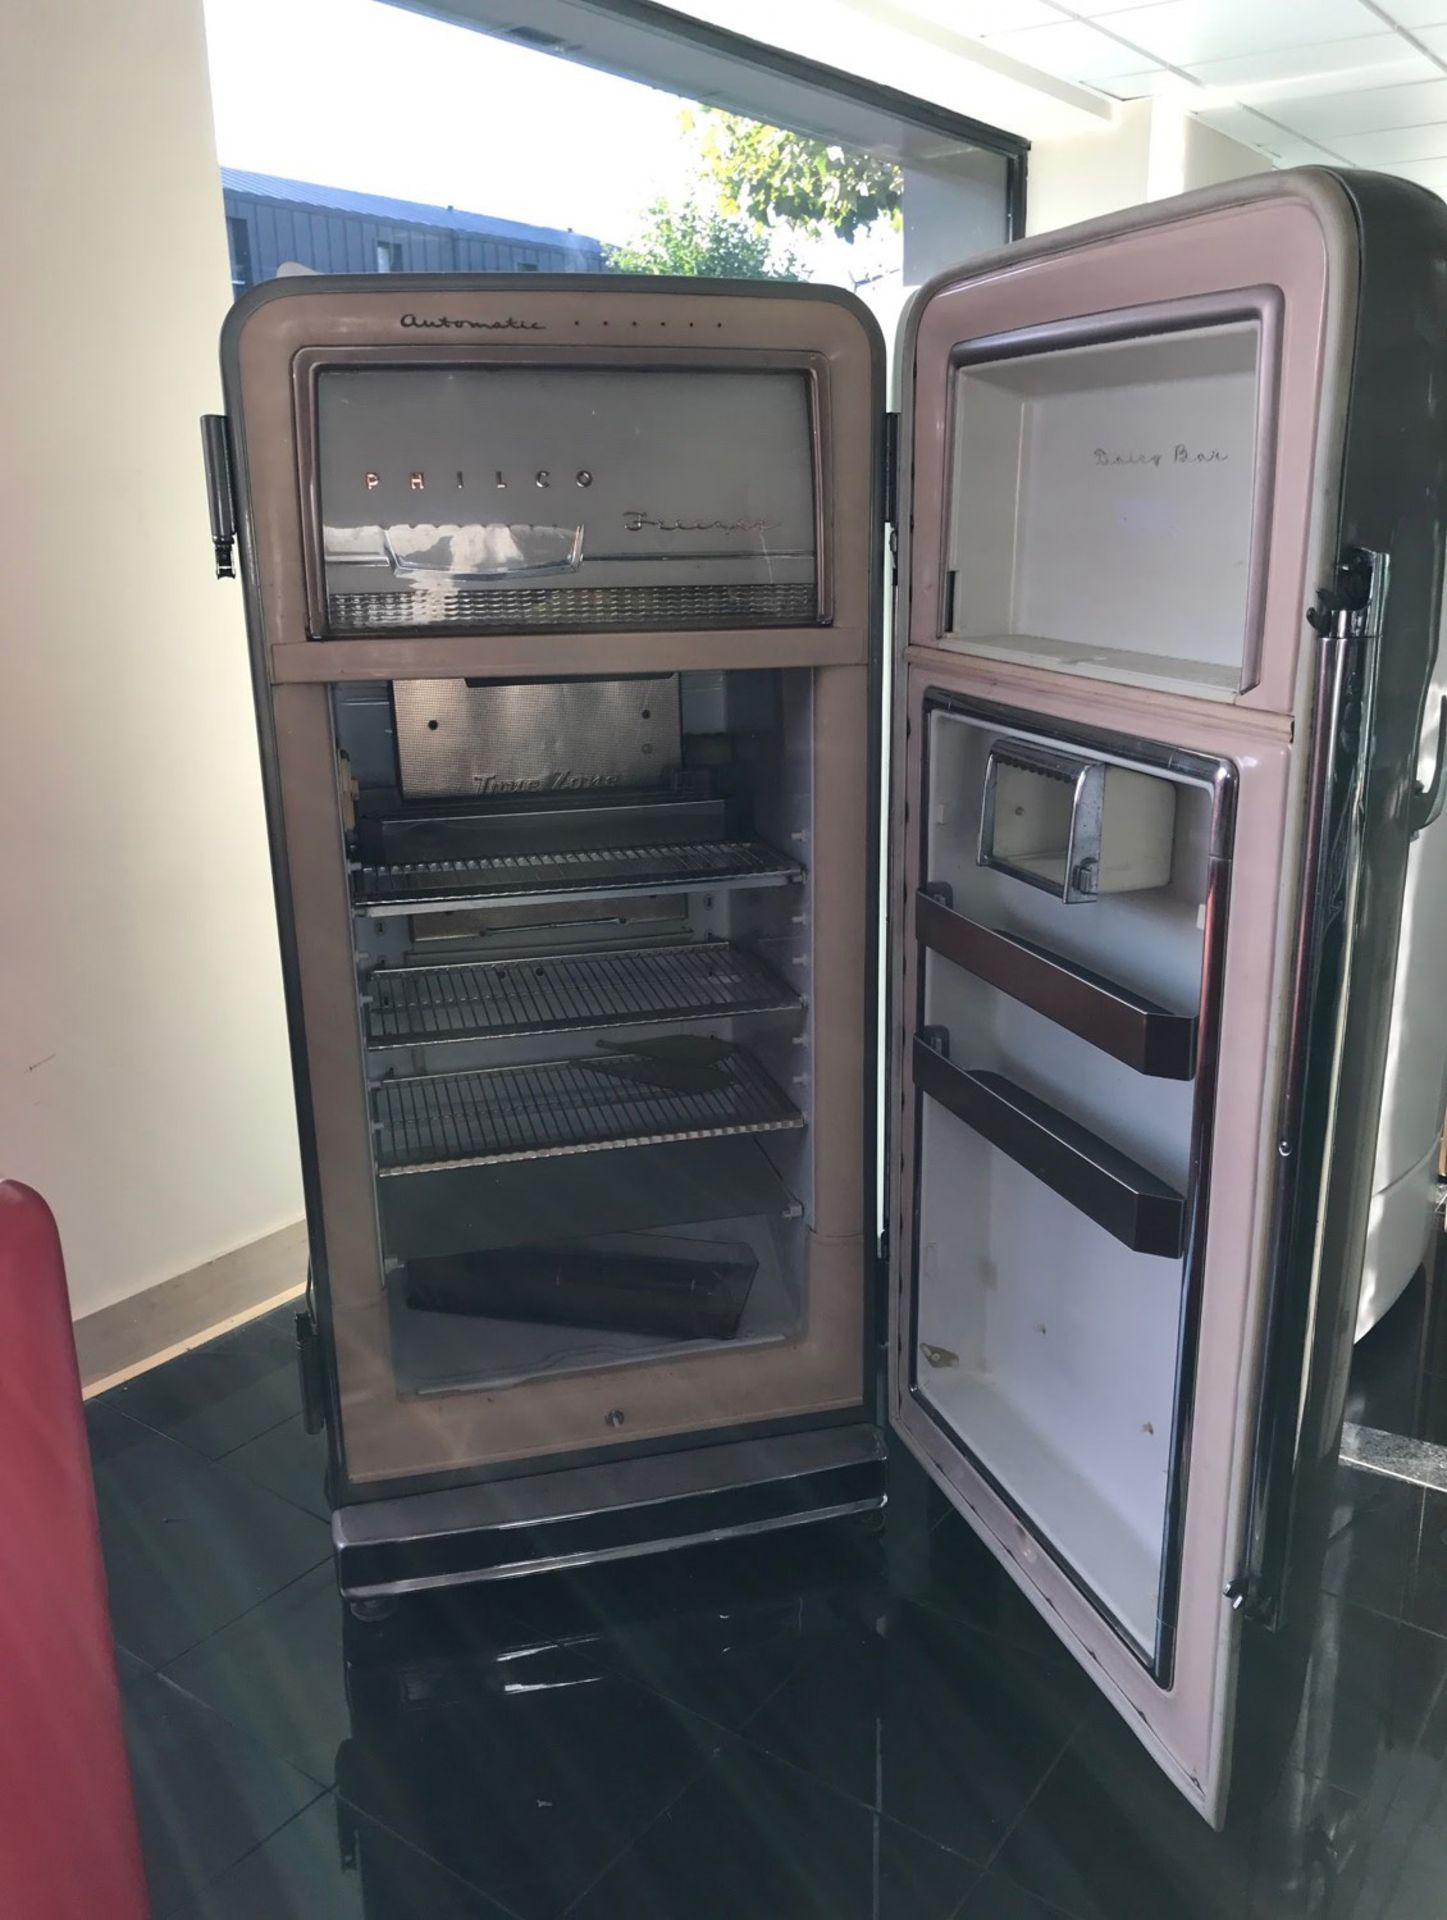 1954 Philco Refrigerator in Metalic Glossy Gray Color - Image 2 of 2